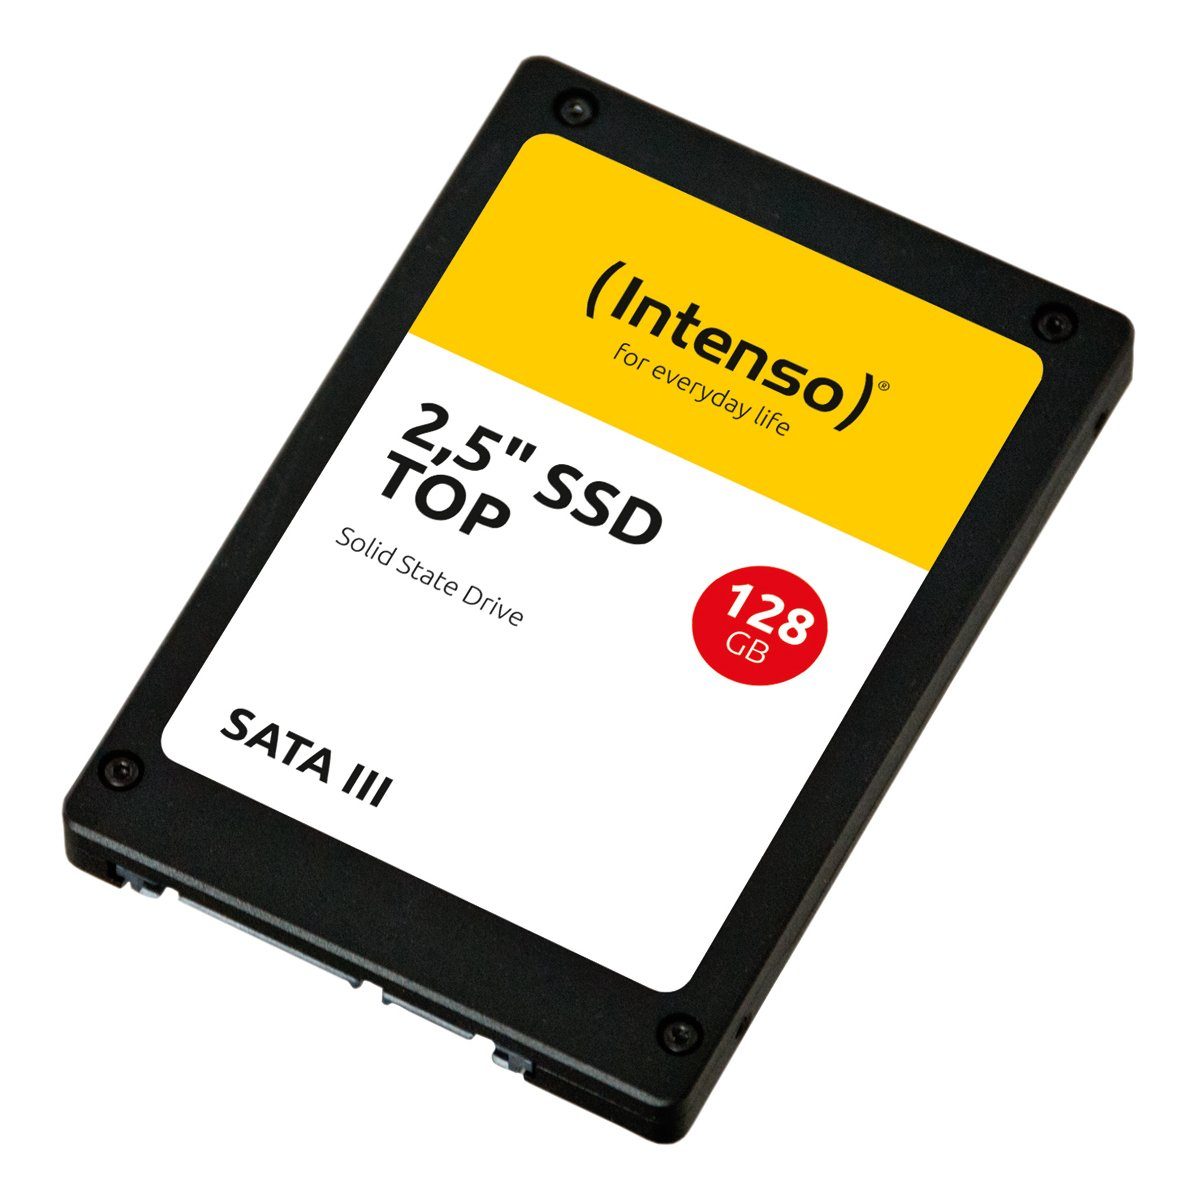 SATA3 SSD Intenso SSD-Festplatte Top Intenso 128GB